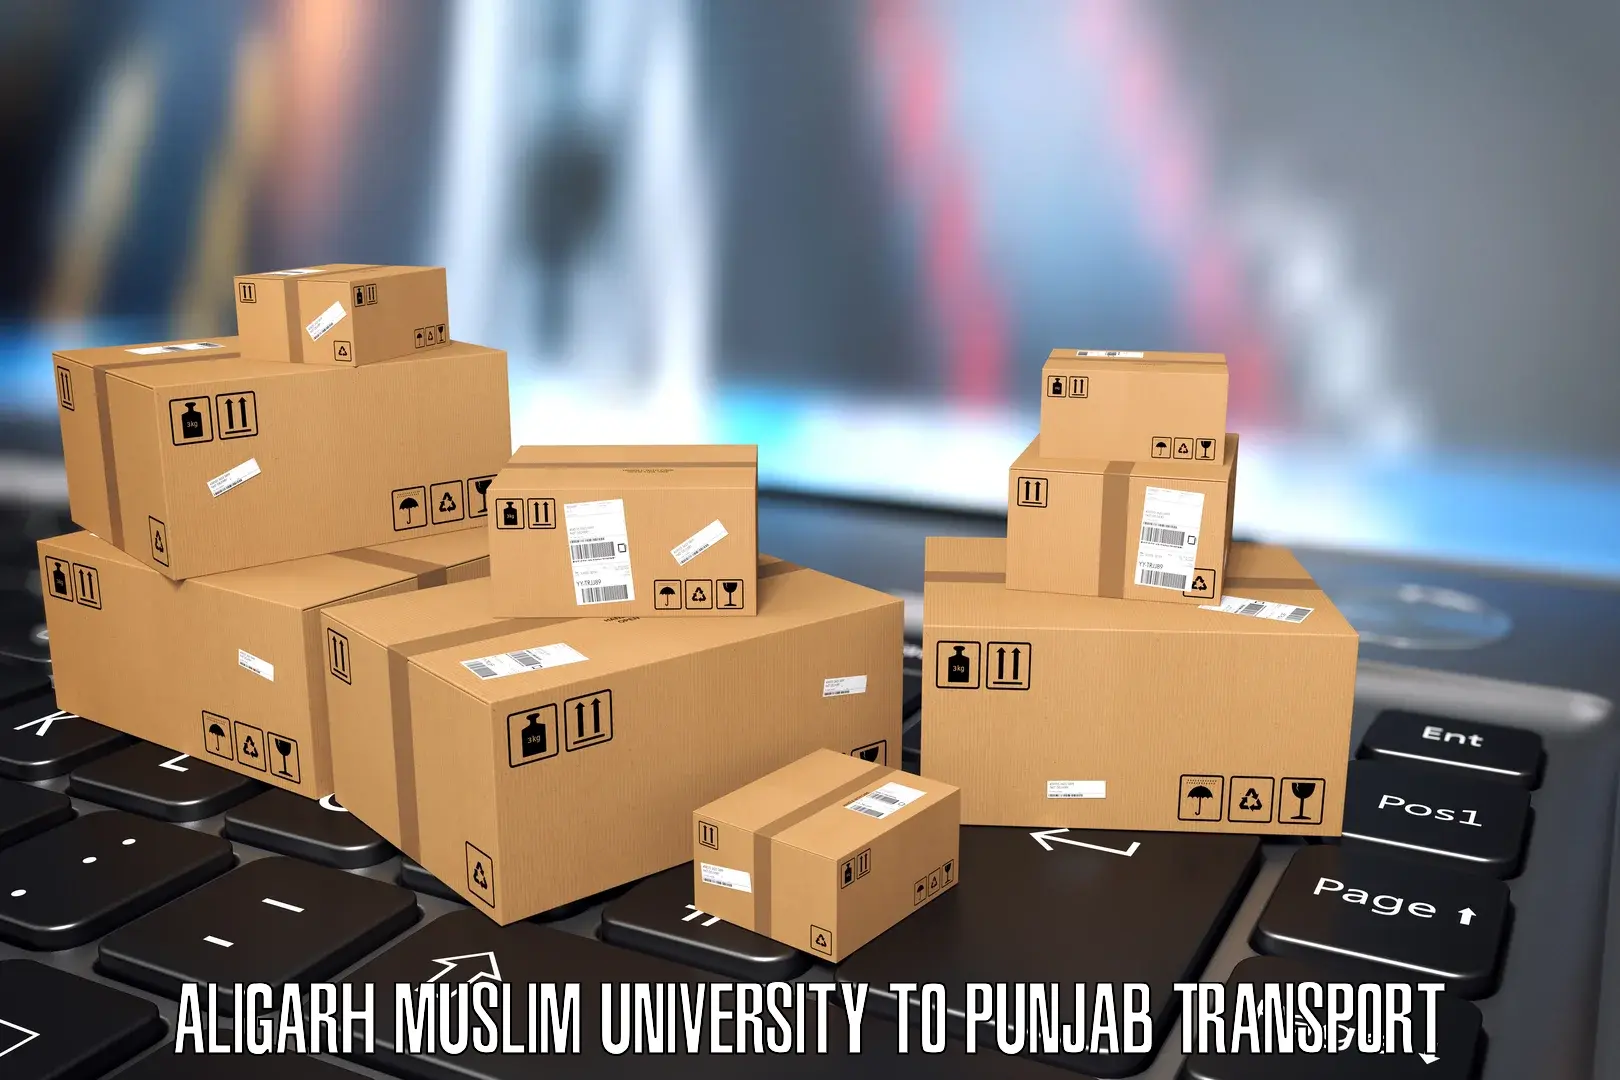 Container transport service Aligarh Muslim University to Dinanagar